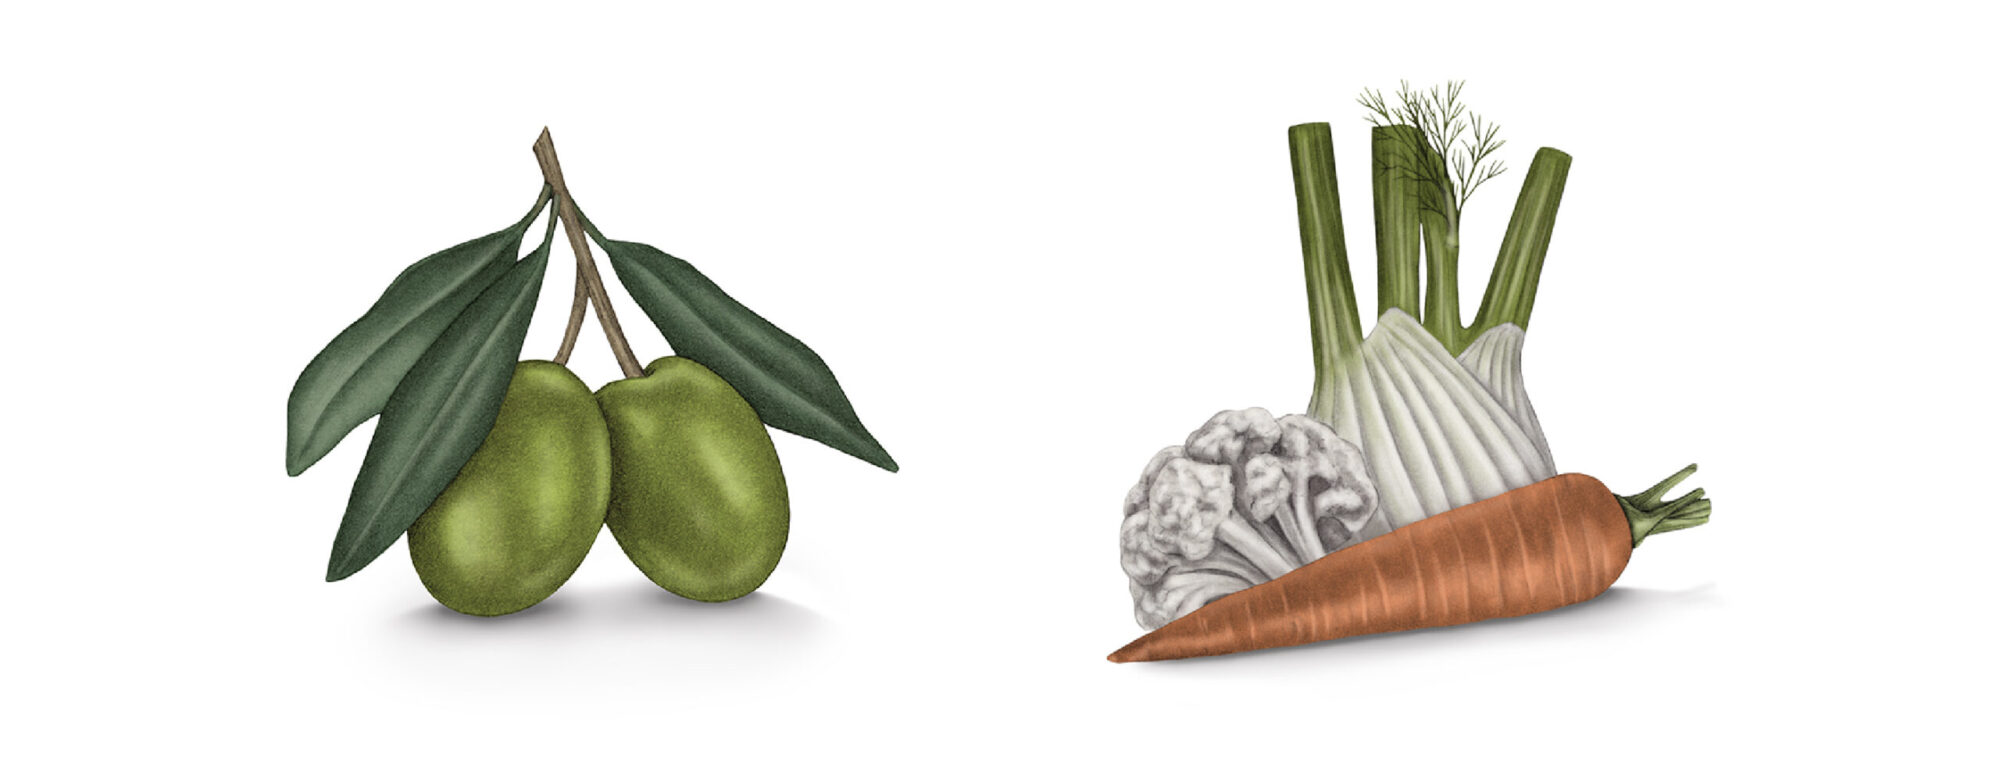 giulia-borsi-illustration-label-design-olives-carrots-fennel-cauliflower